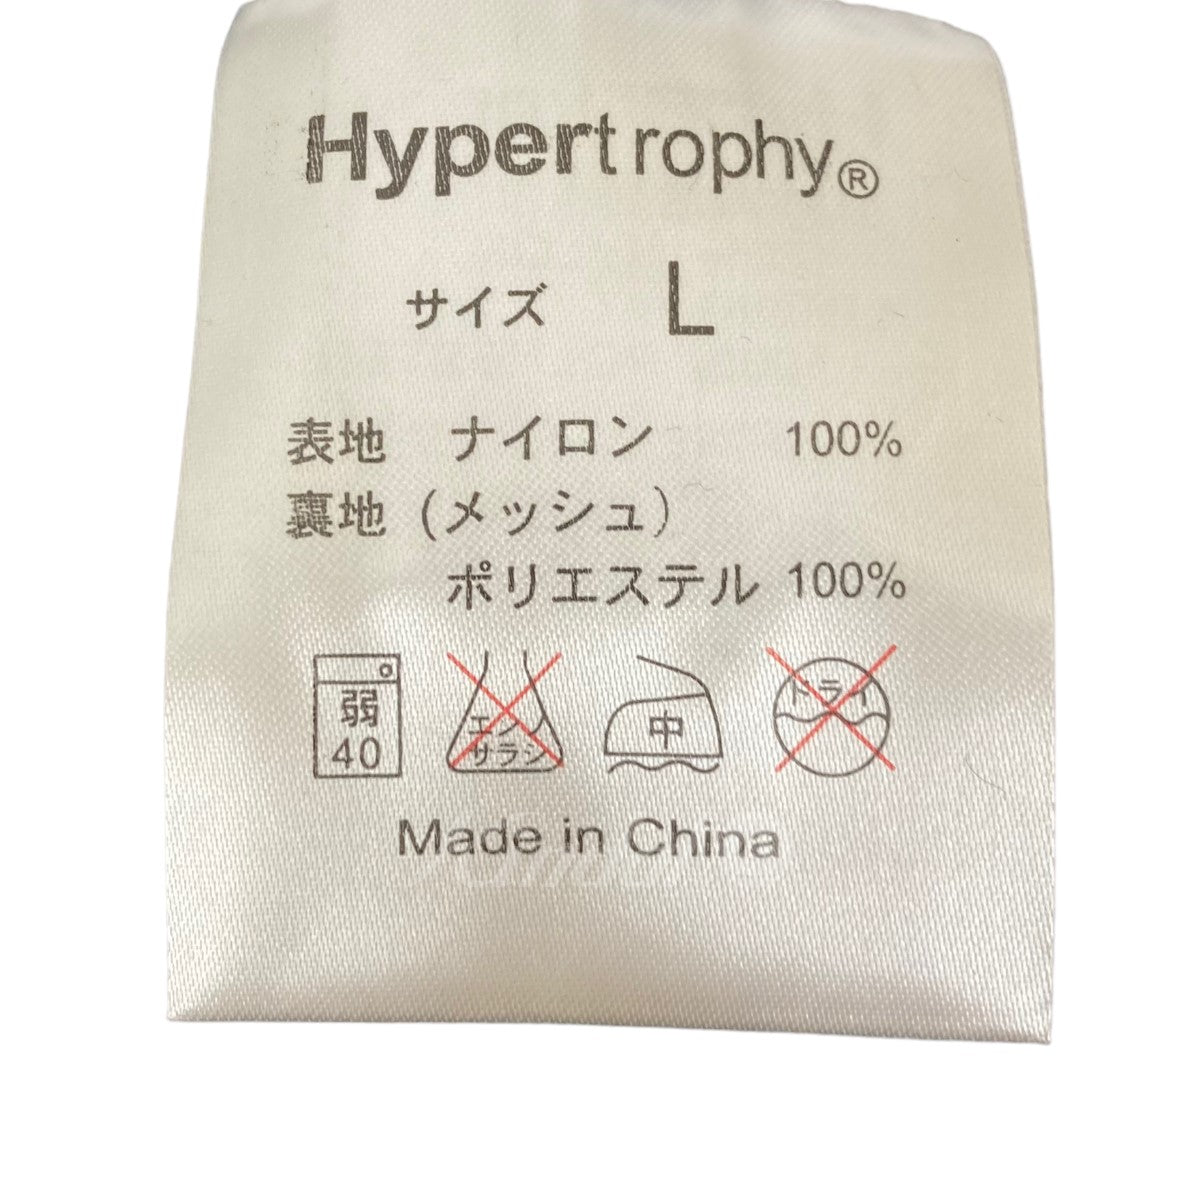 hypertrophy(ハイパートロフィー) Fatzipper zip-up ジャケット 